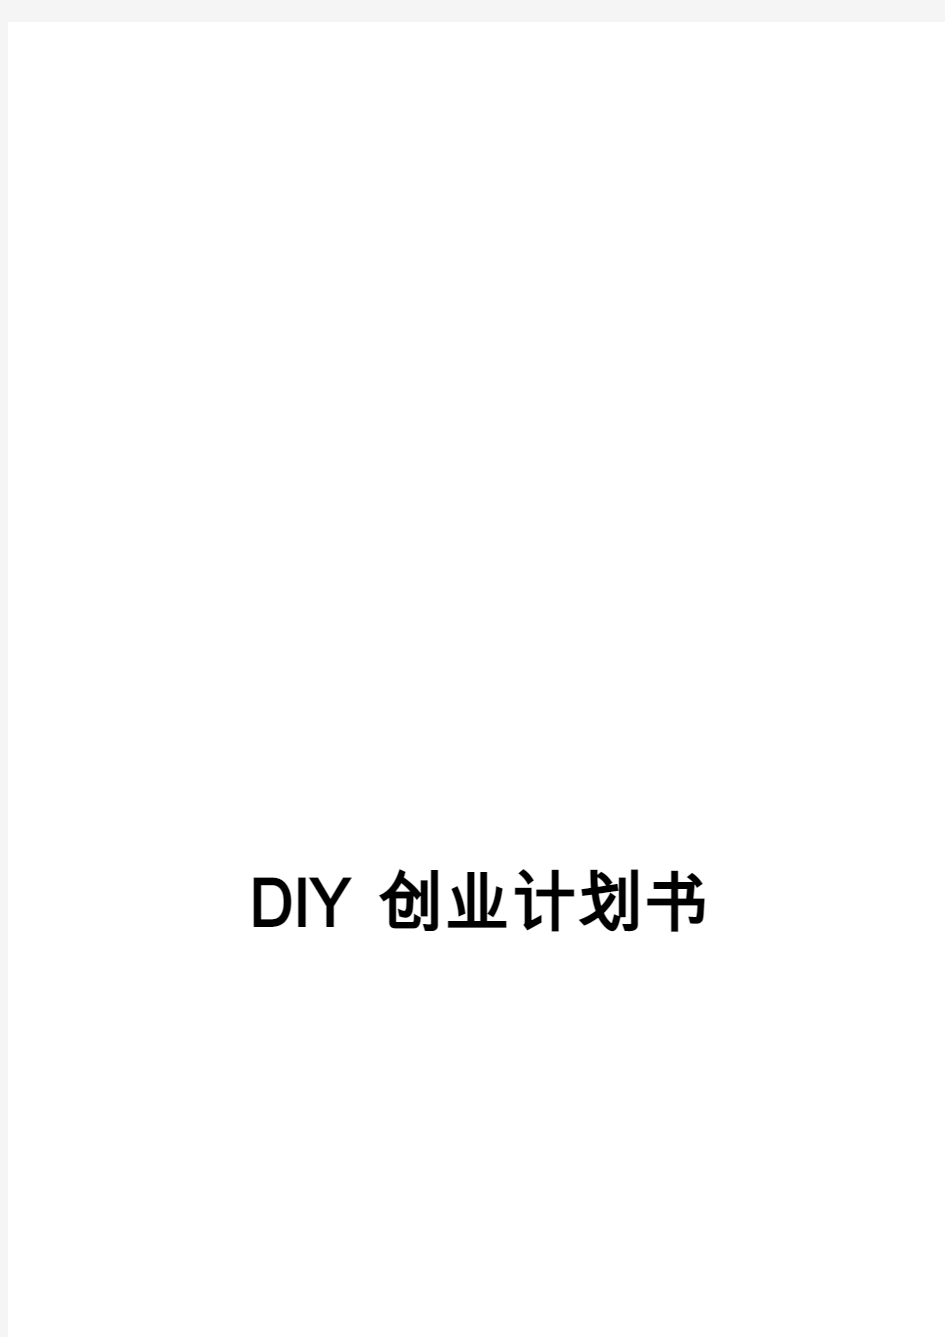 DIY创业计划书(样本)